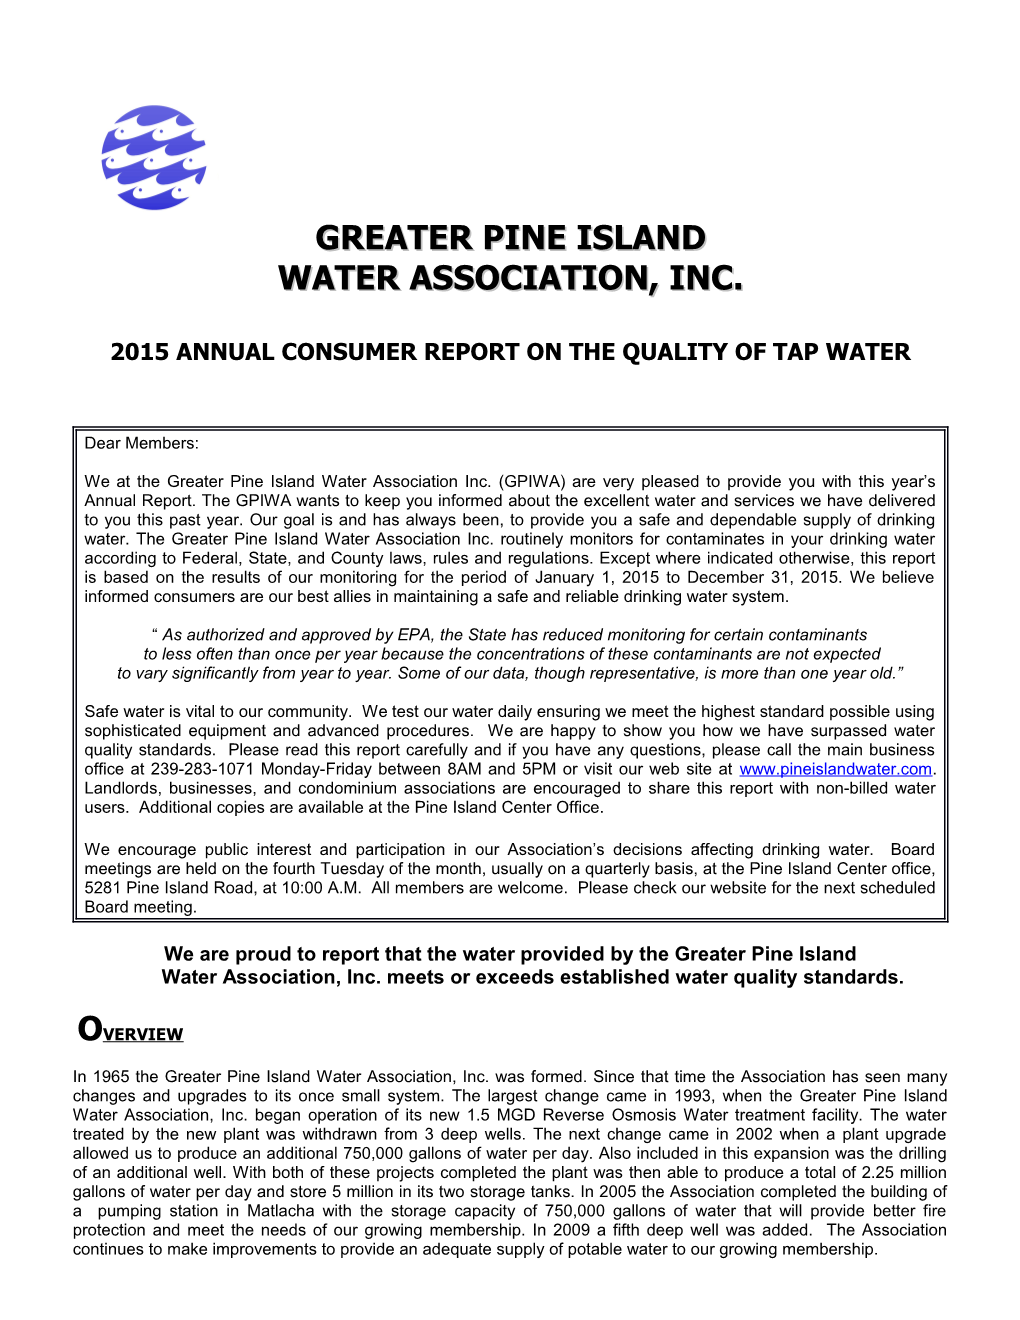 Greater Pine Island Water Association, Inc